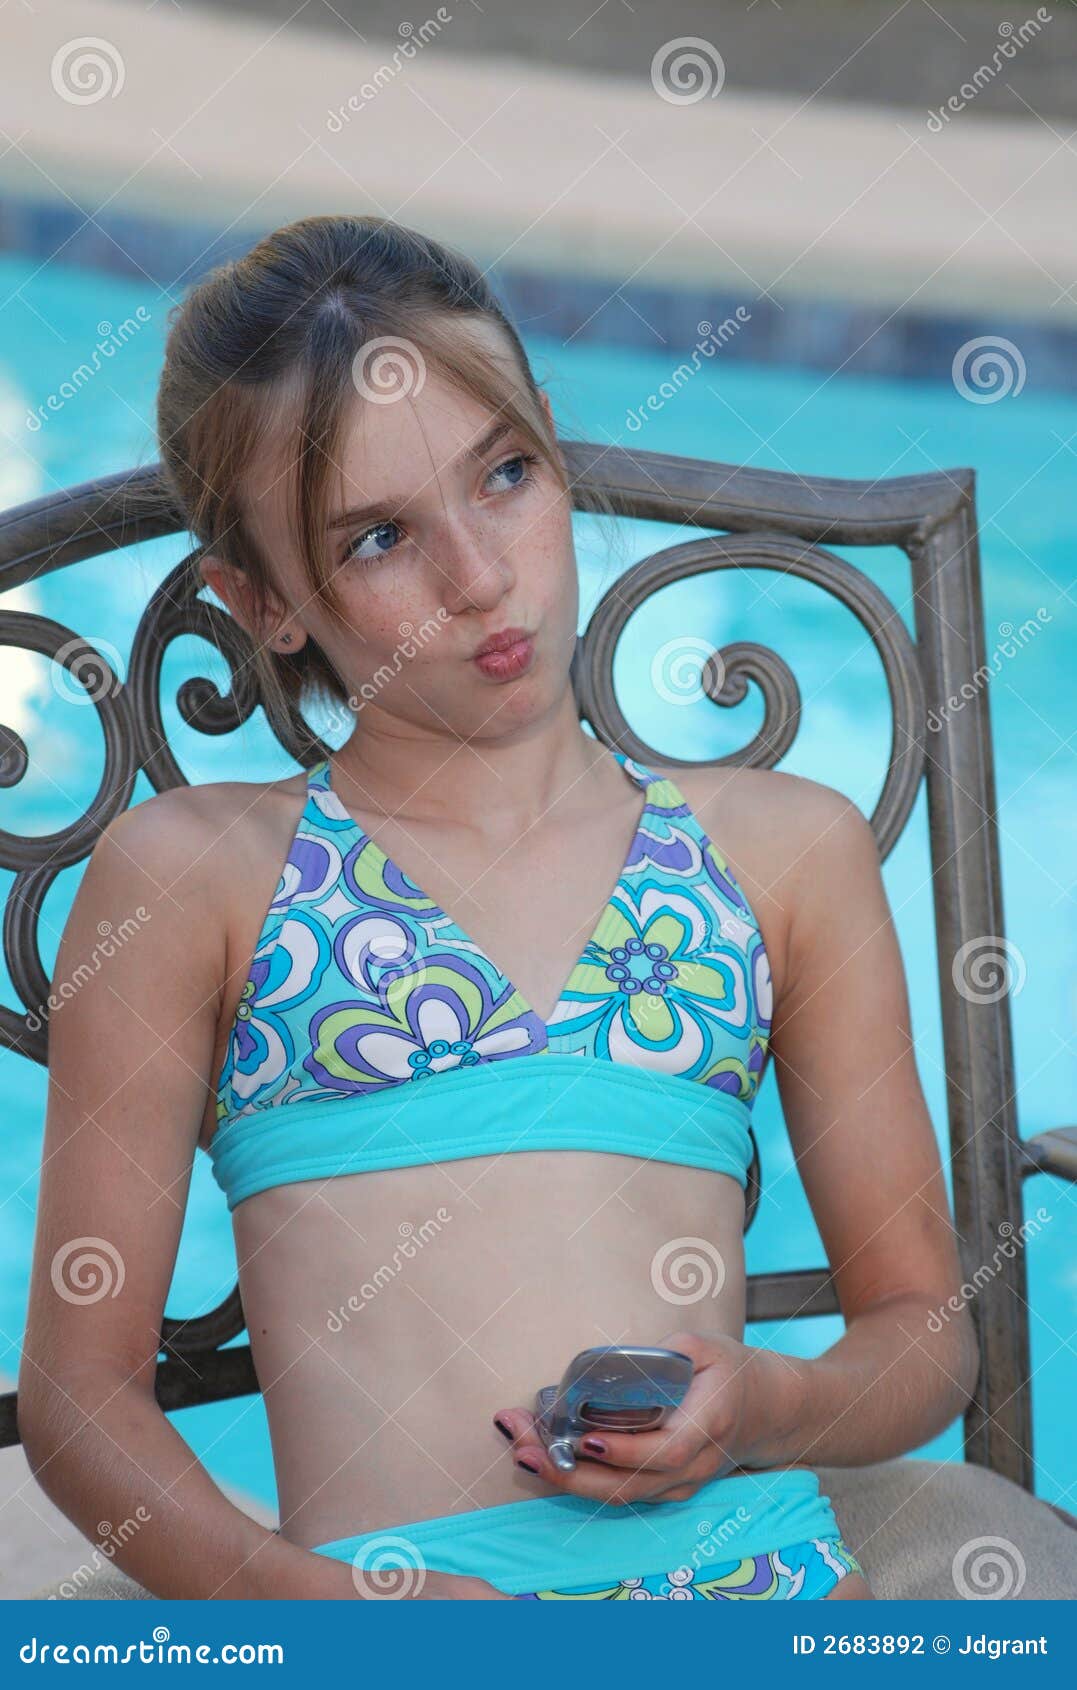 brian connoy add photo teen bikini public